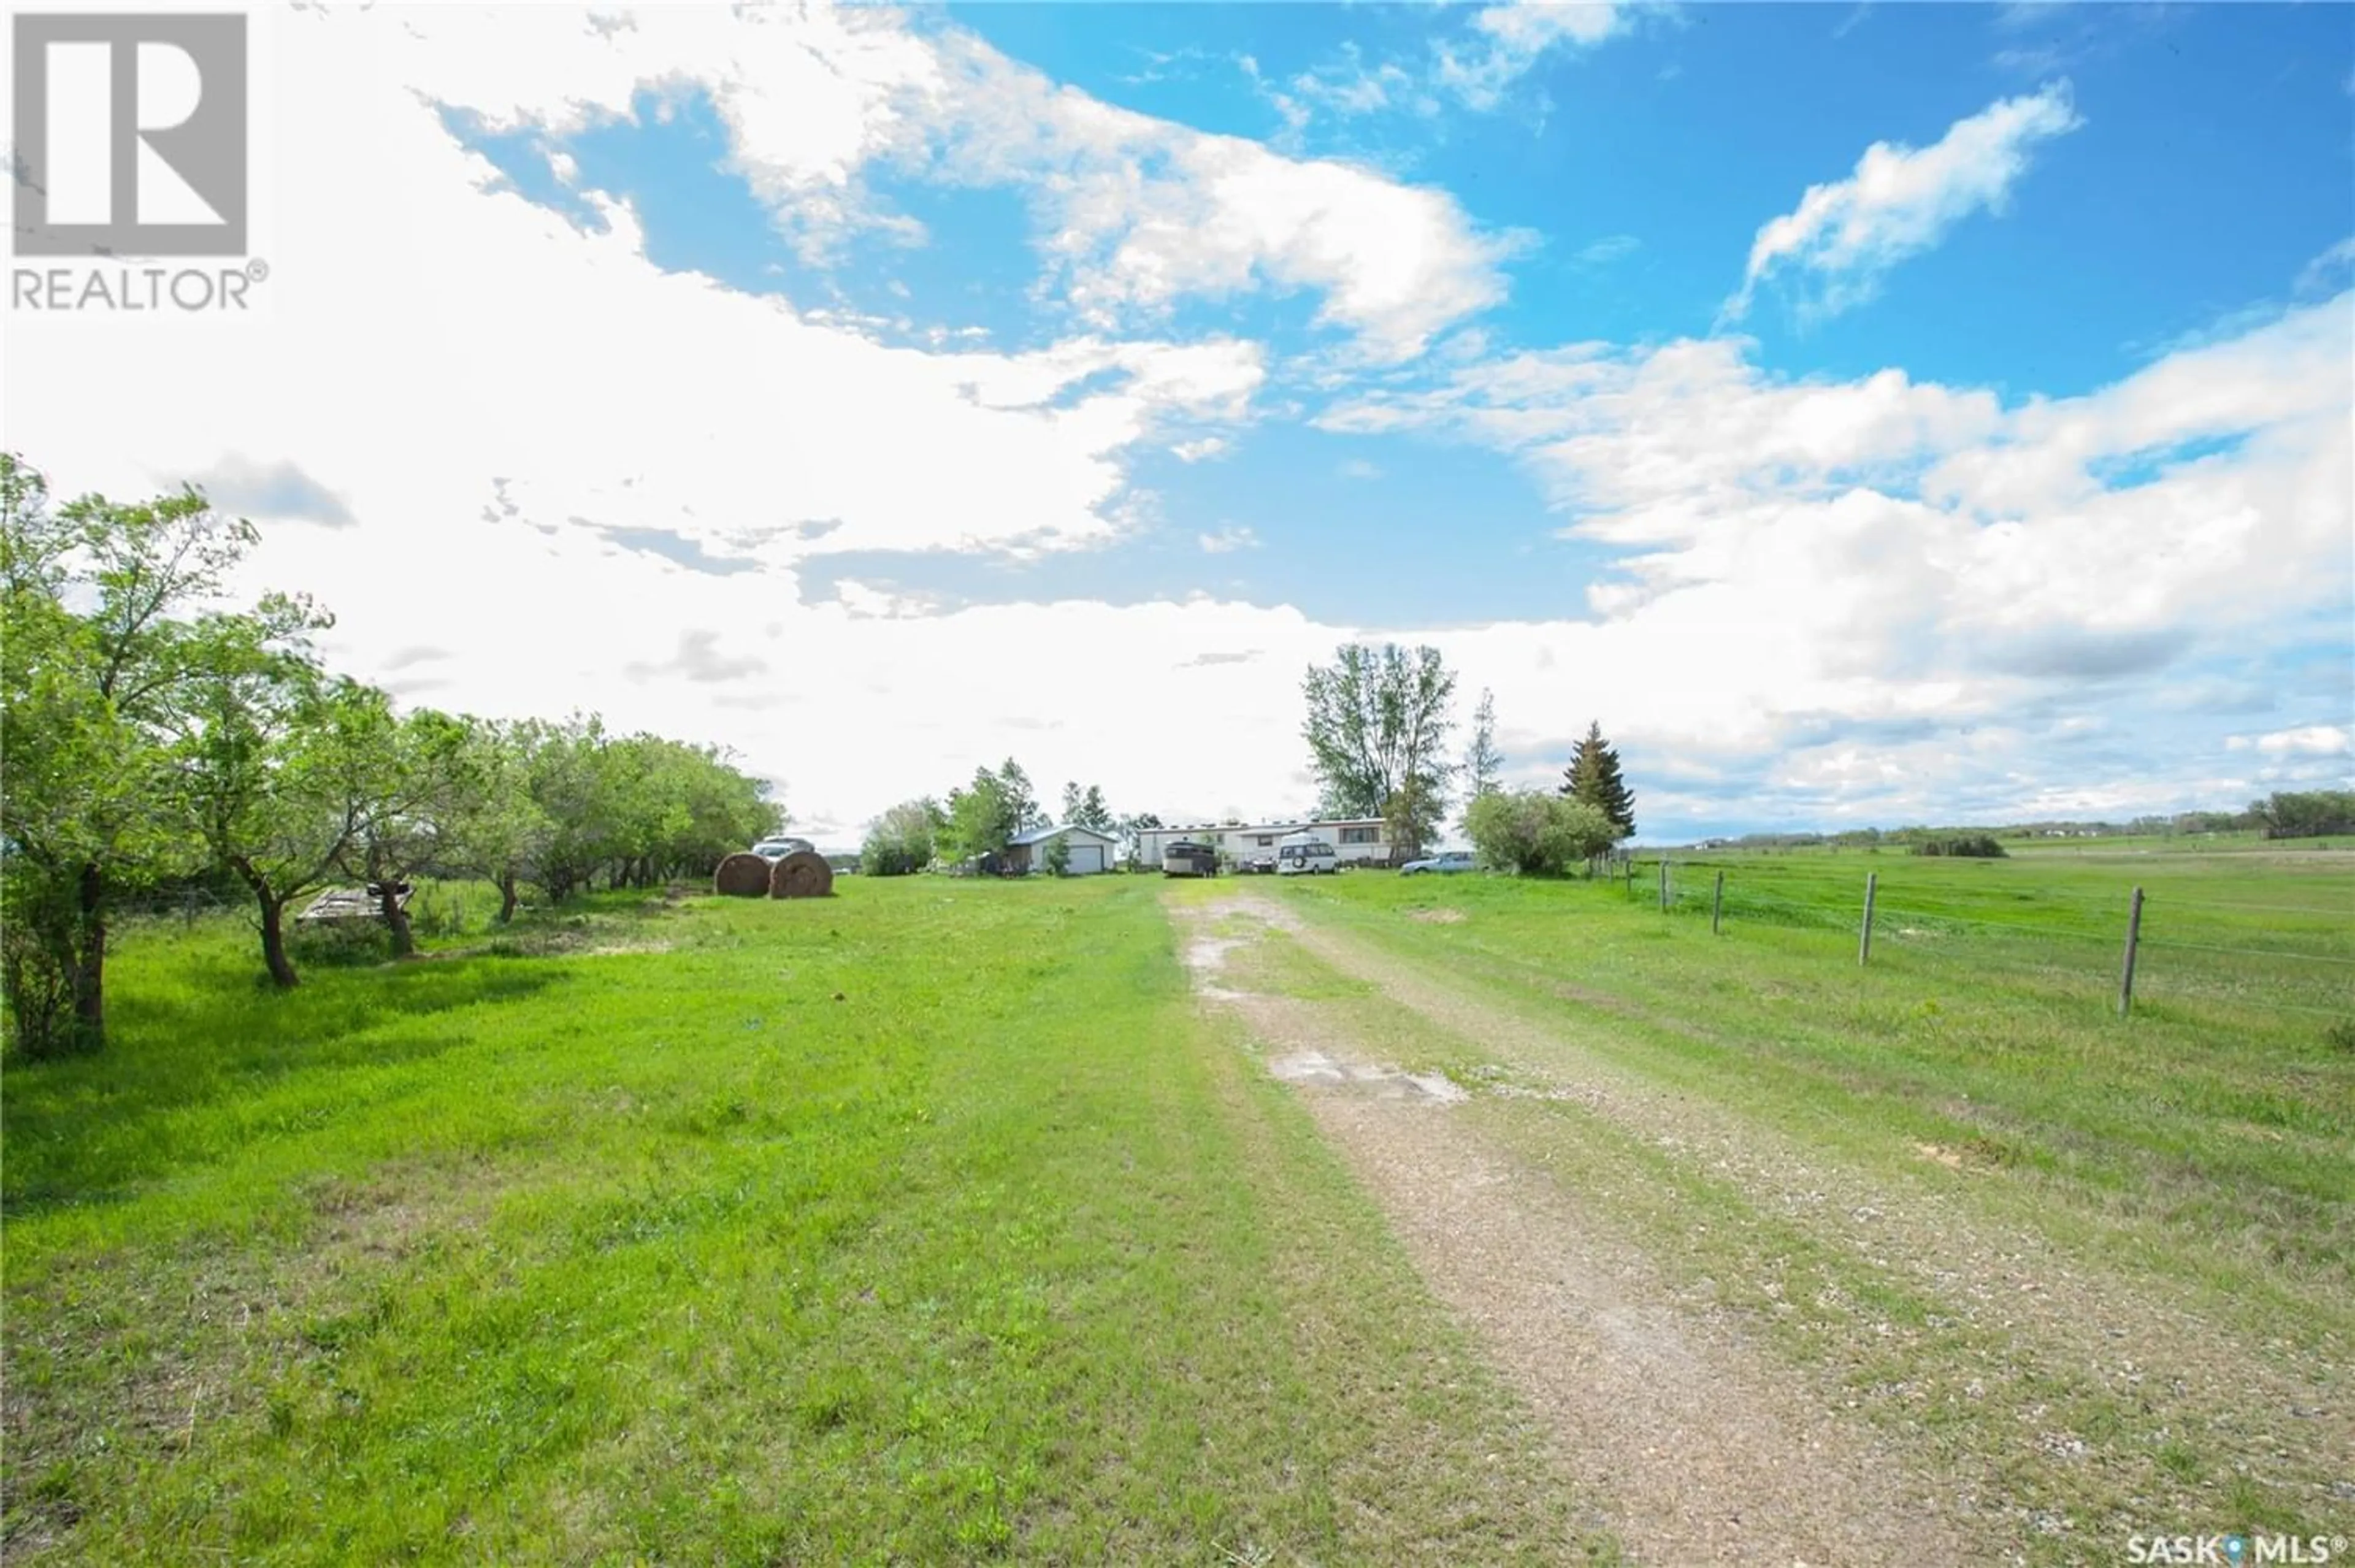 Street view for Tallman Acreage, Vanscoy Saskatchewan S0L3J0